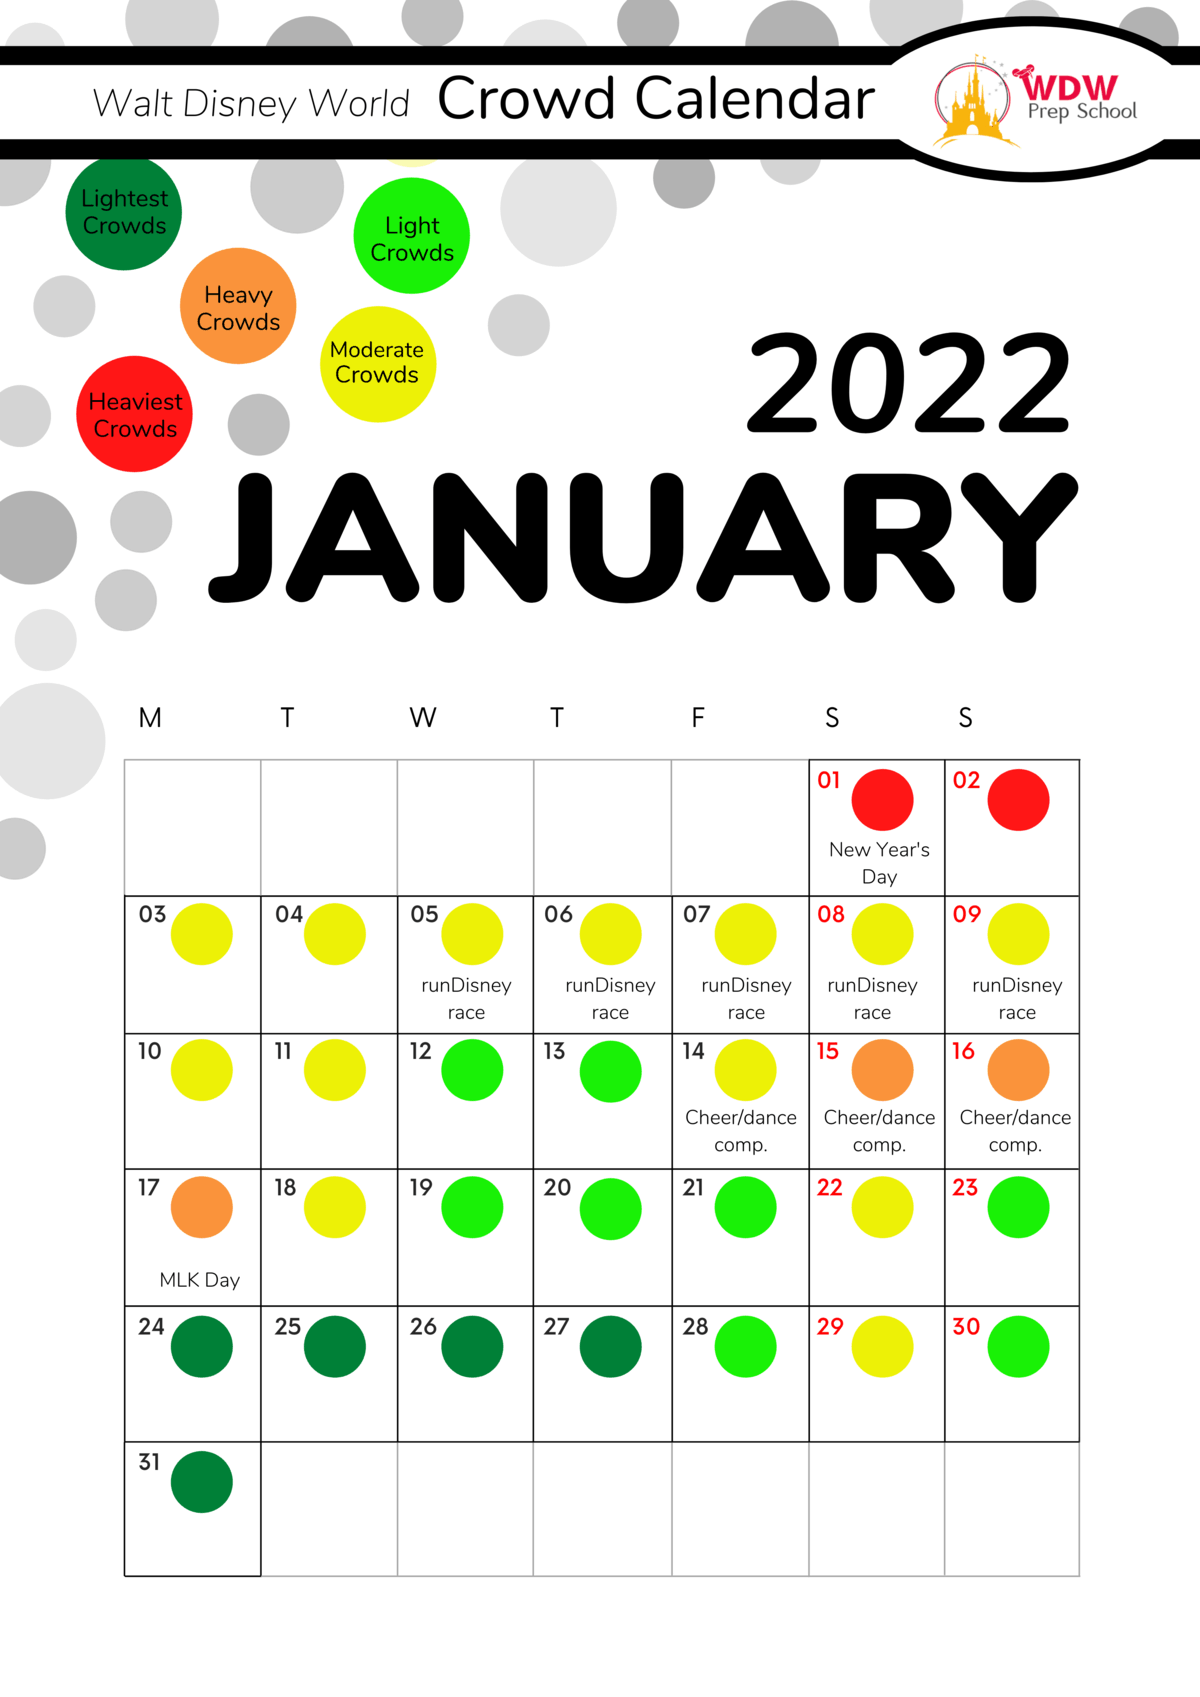 Orlando Crowd Calendar 2022 Disney World 2022 Crowd Calendar (Best Times To Go)